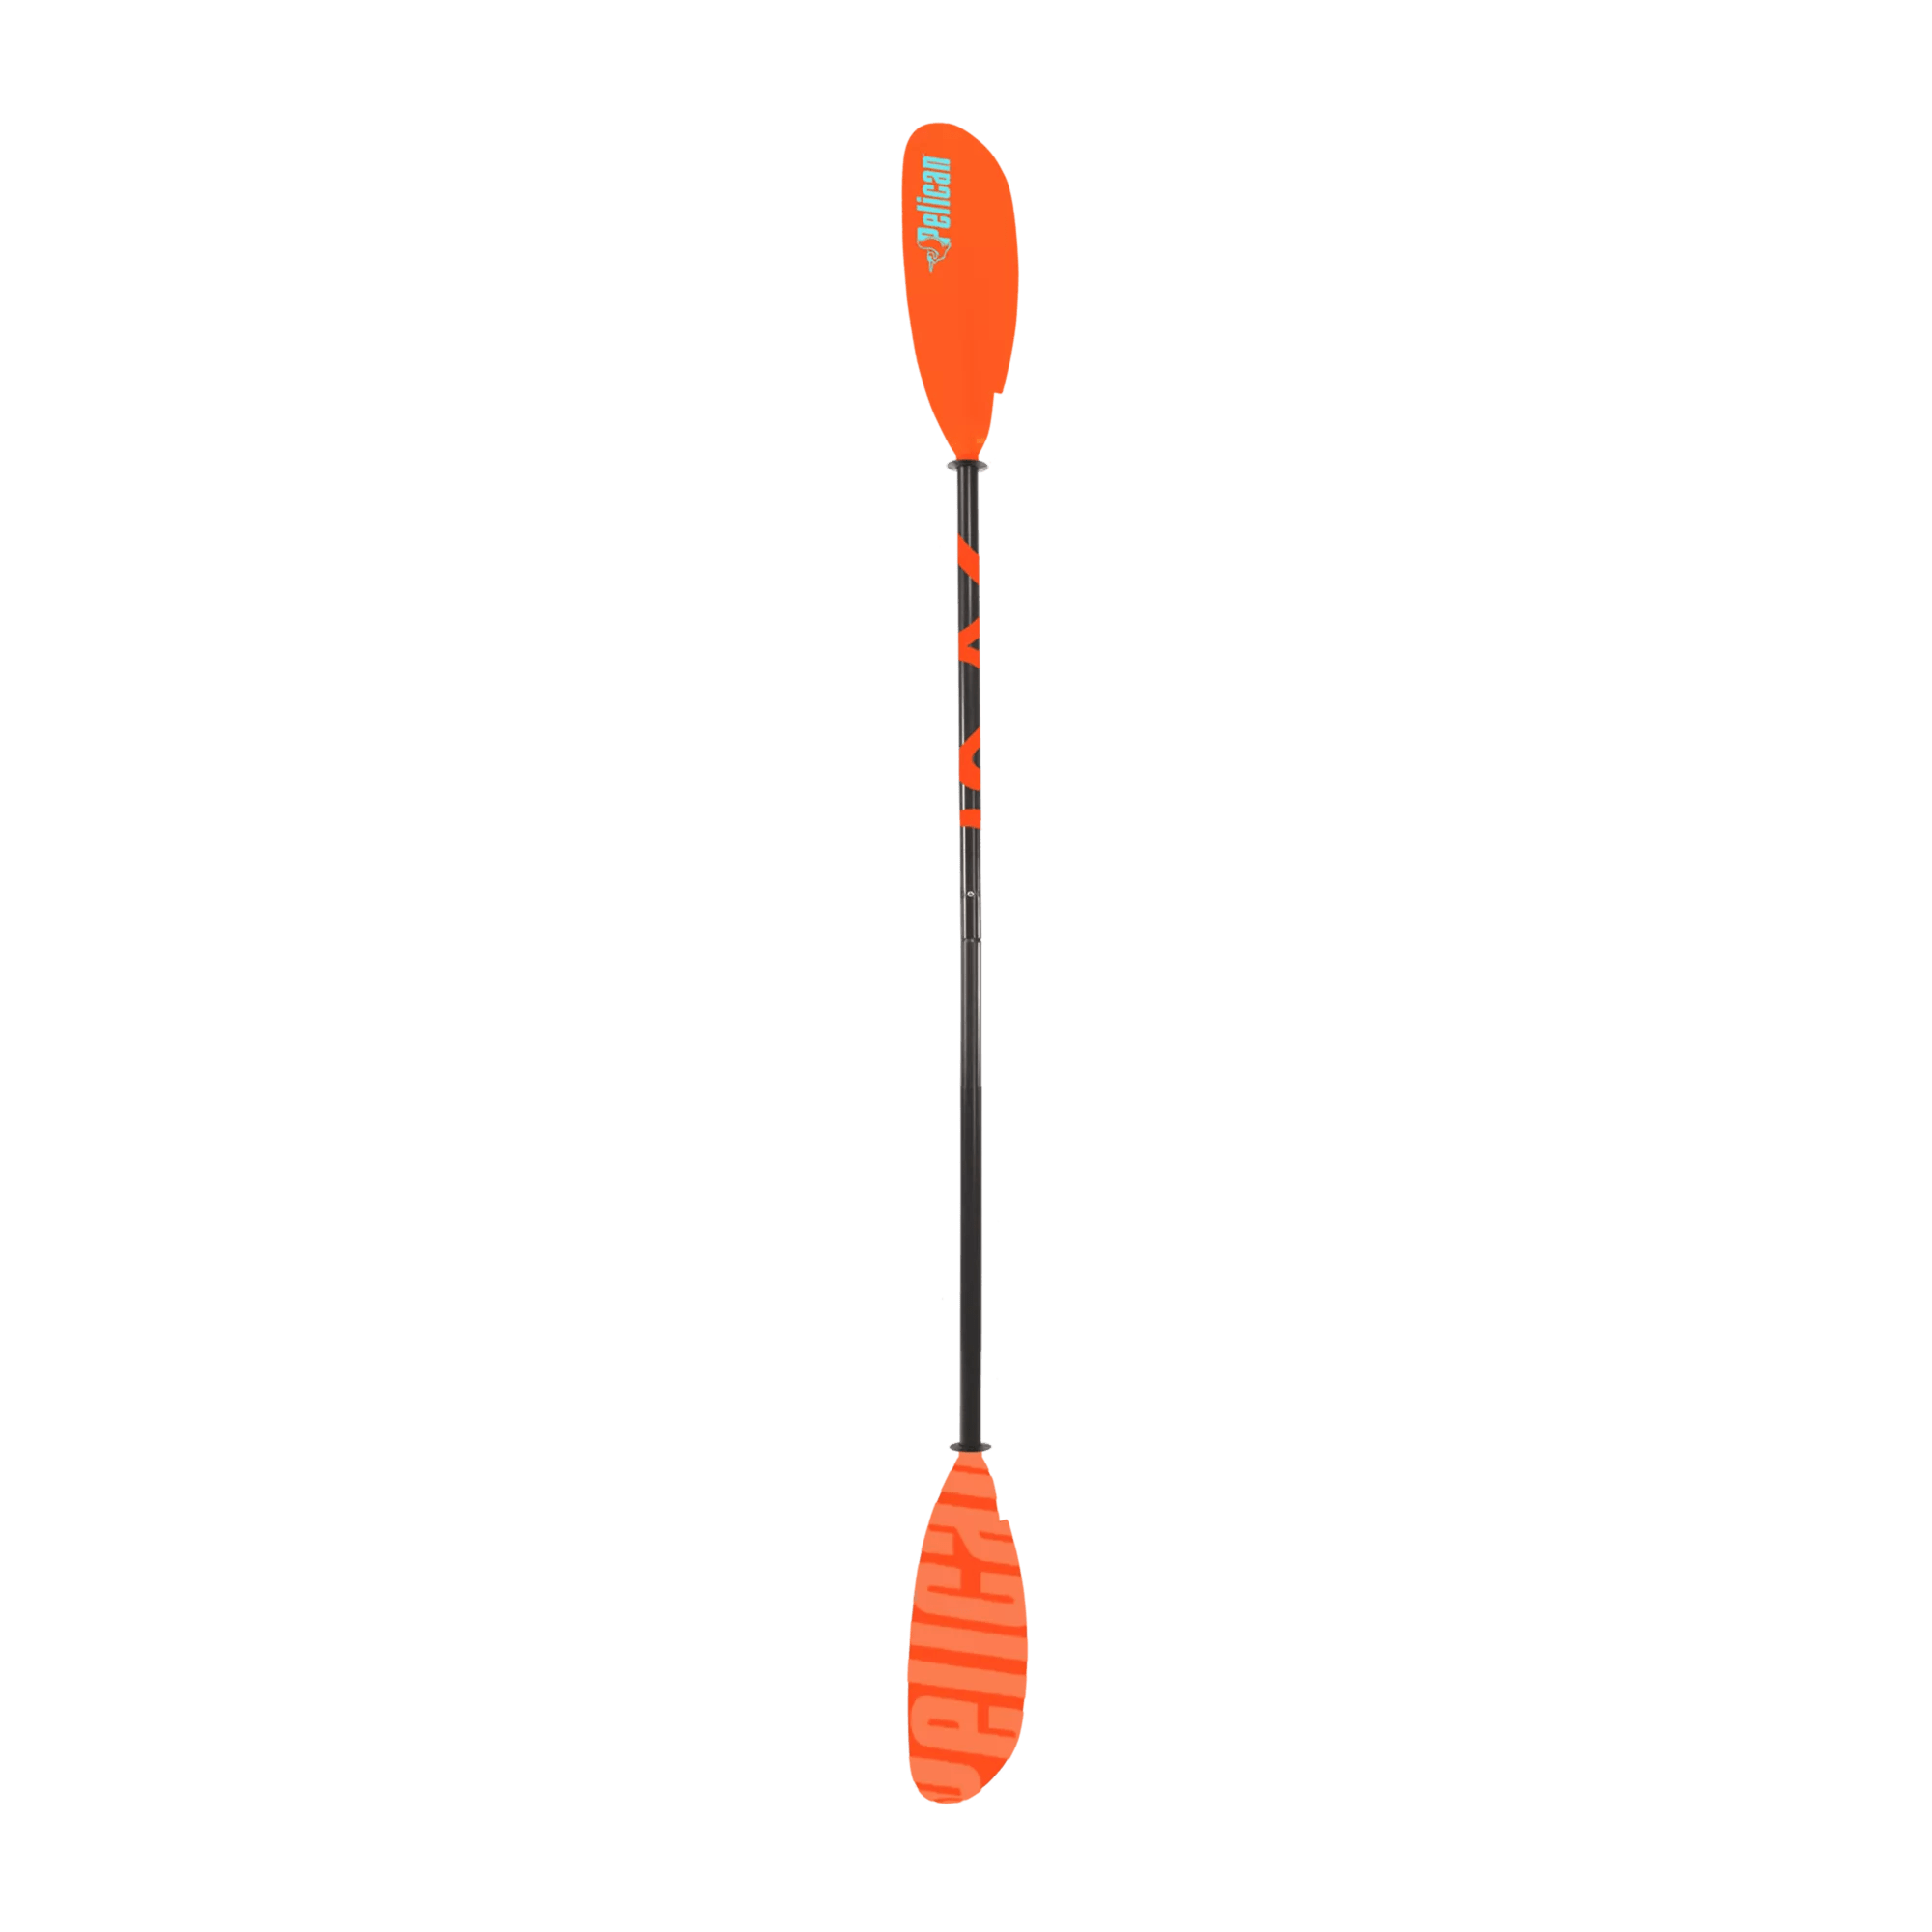 PELICAN - Pagaie de kayak Vesta de 226 cm (89 po) en aluminium et en fibre de verre - Orange - PS1137 - TOP